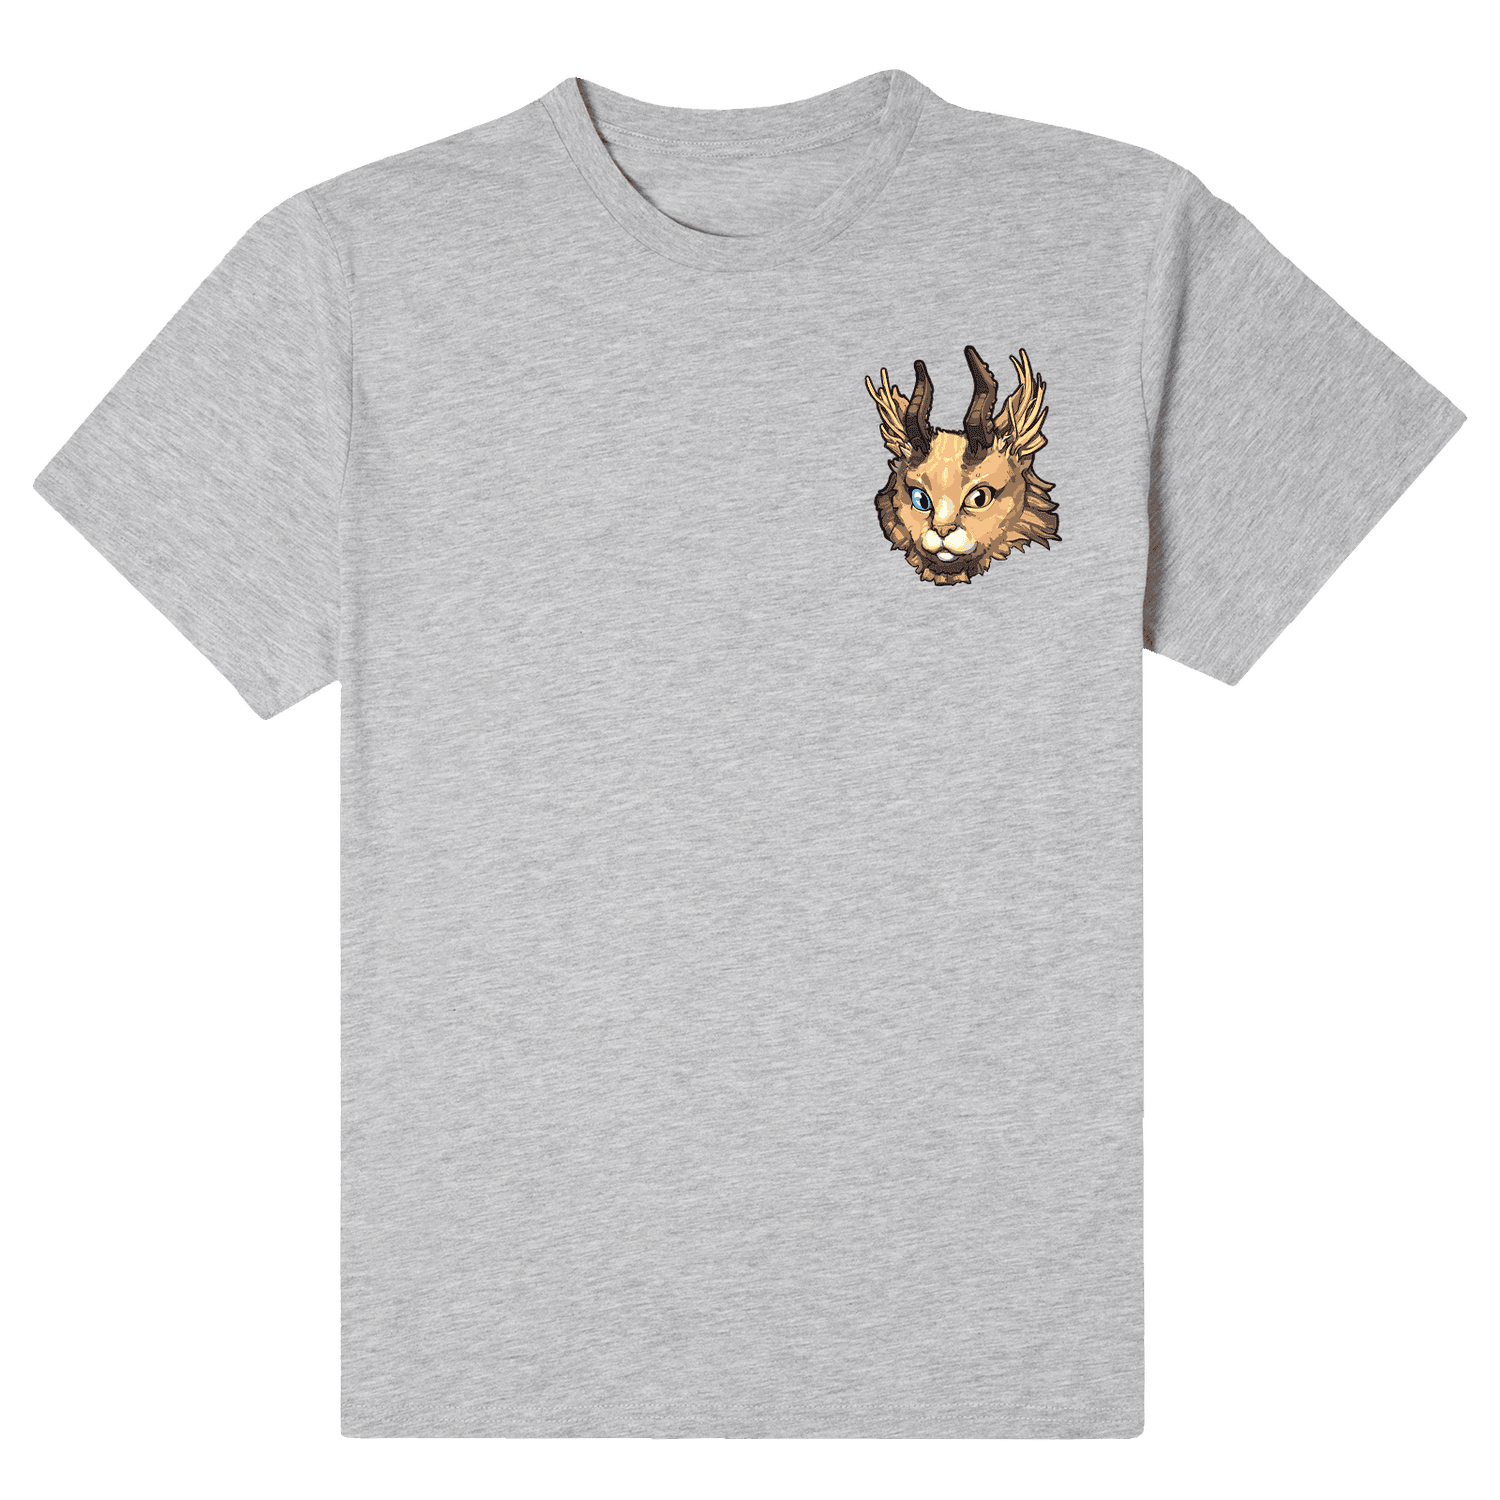 Tribes of Midgard Soleyra Pocket Unisex T-Shirt - Grey